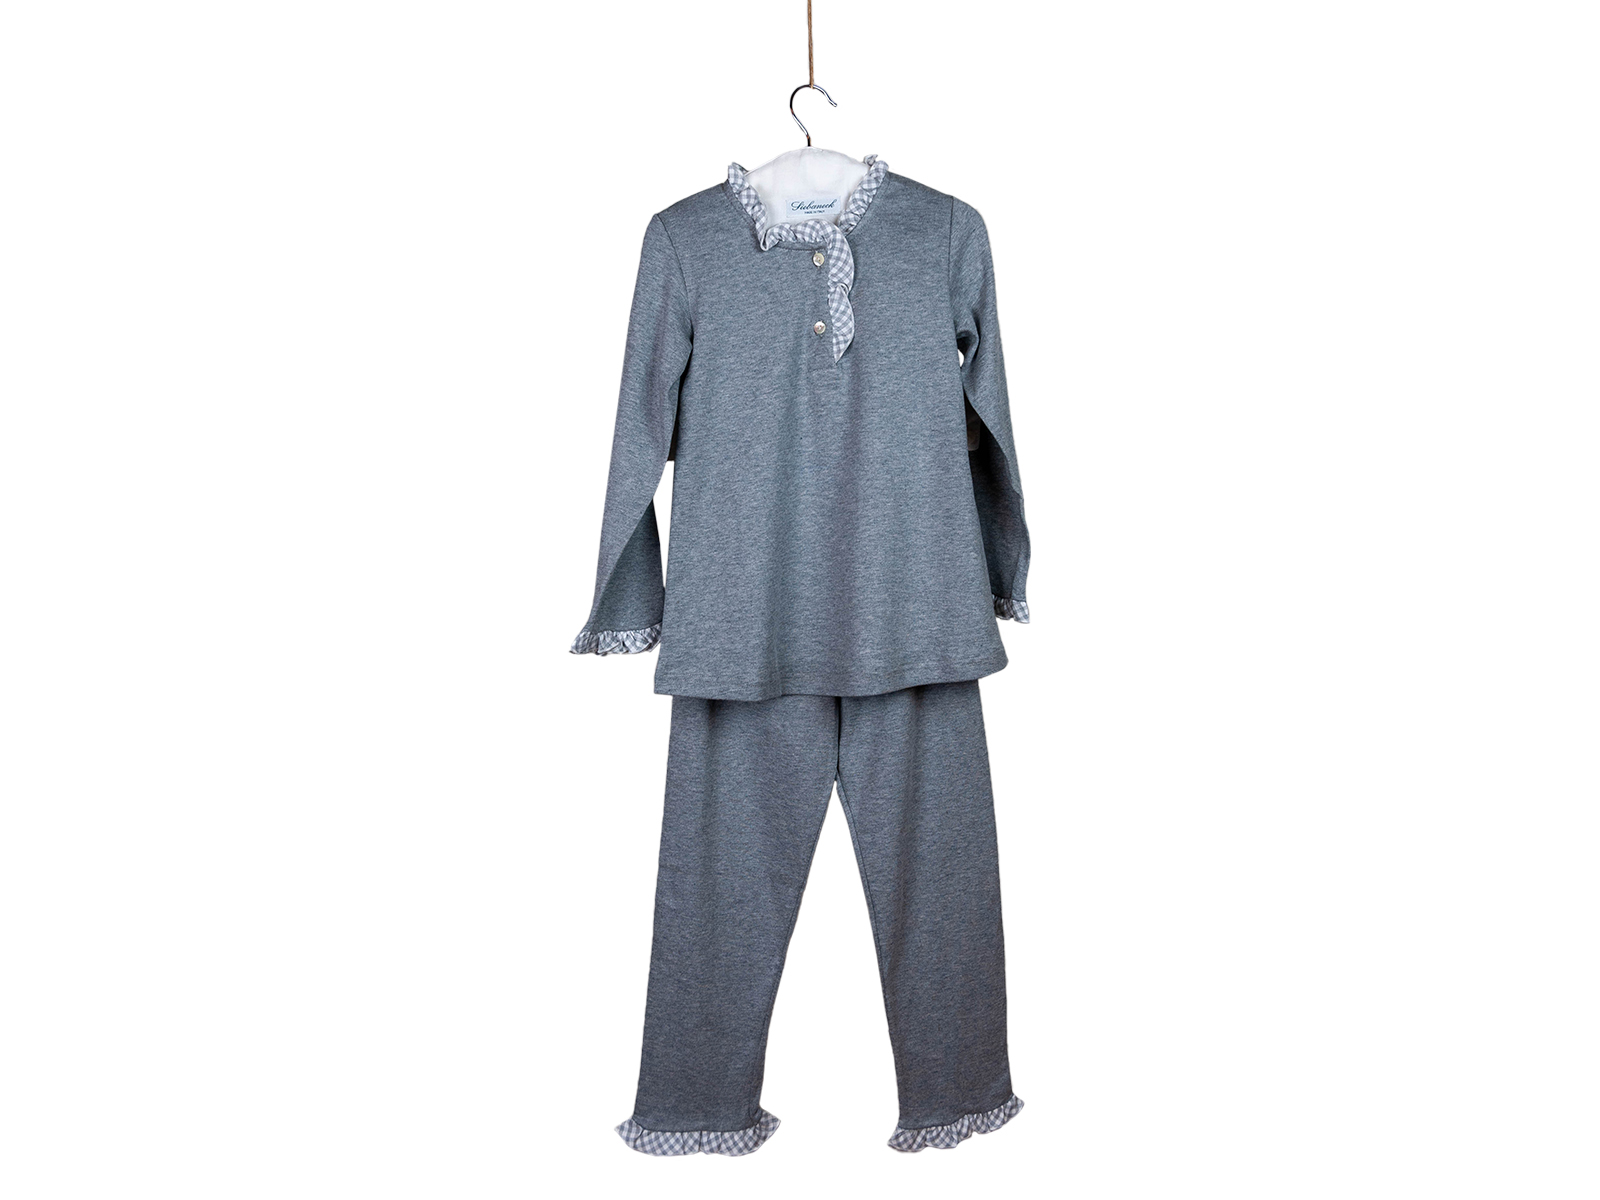 Siebaneck, i pigiami artigianali italiani: -bambina - mod.8 Bis grigio